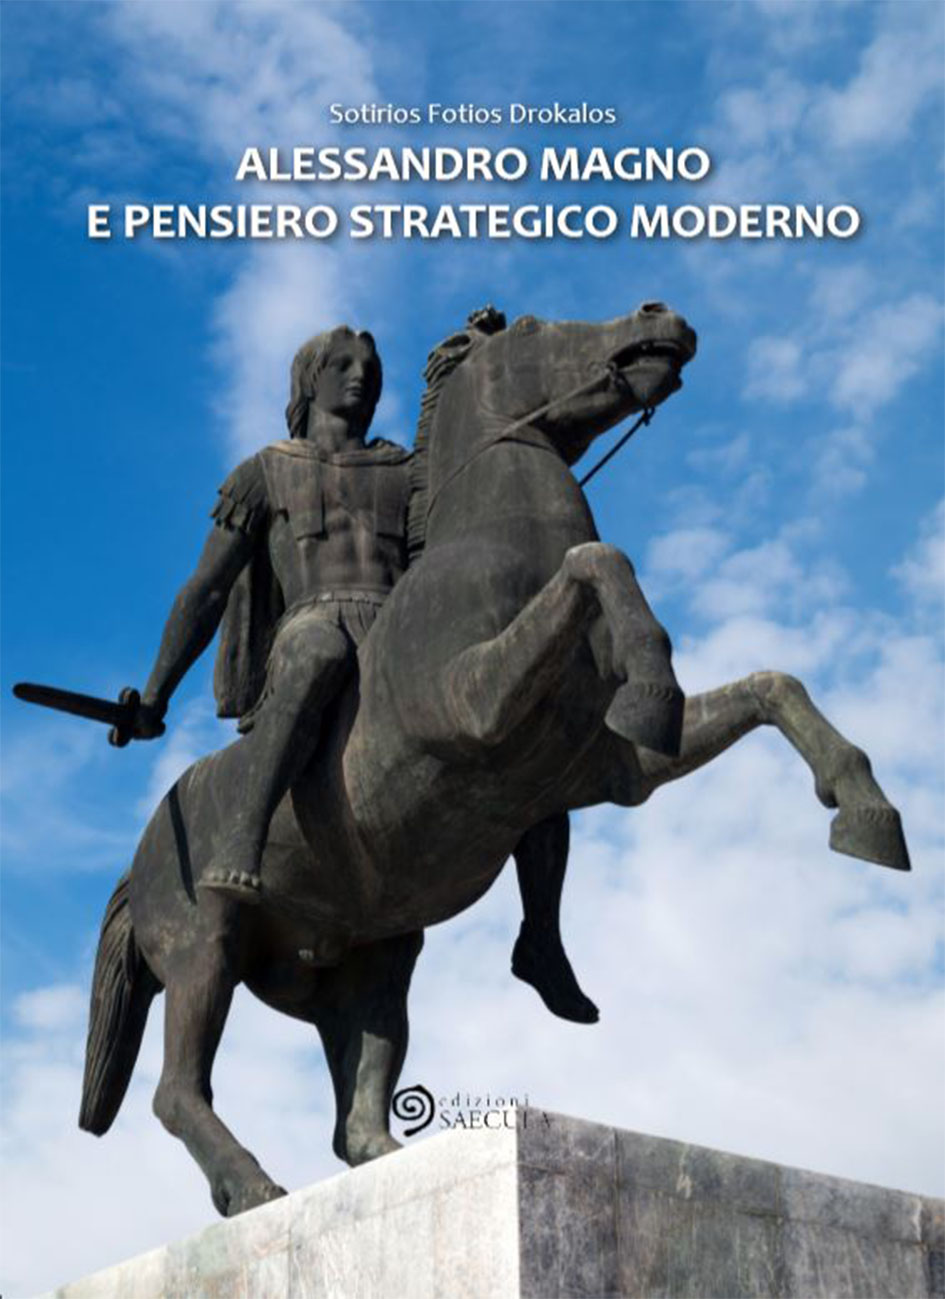 Alessandro Magno e pensiero strategico moderno, di Sotirios Fotios Drokalos